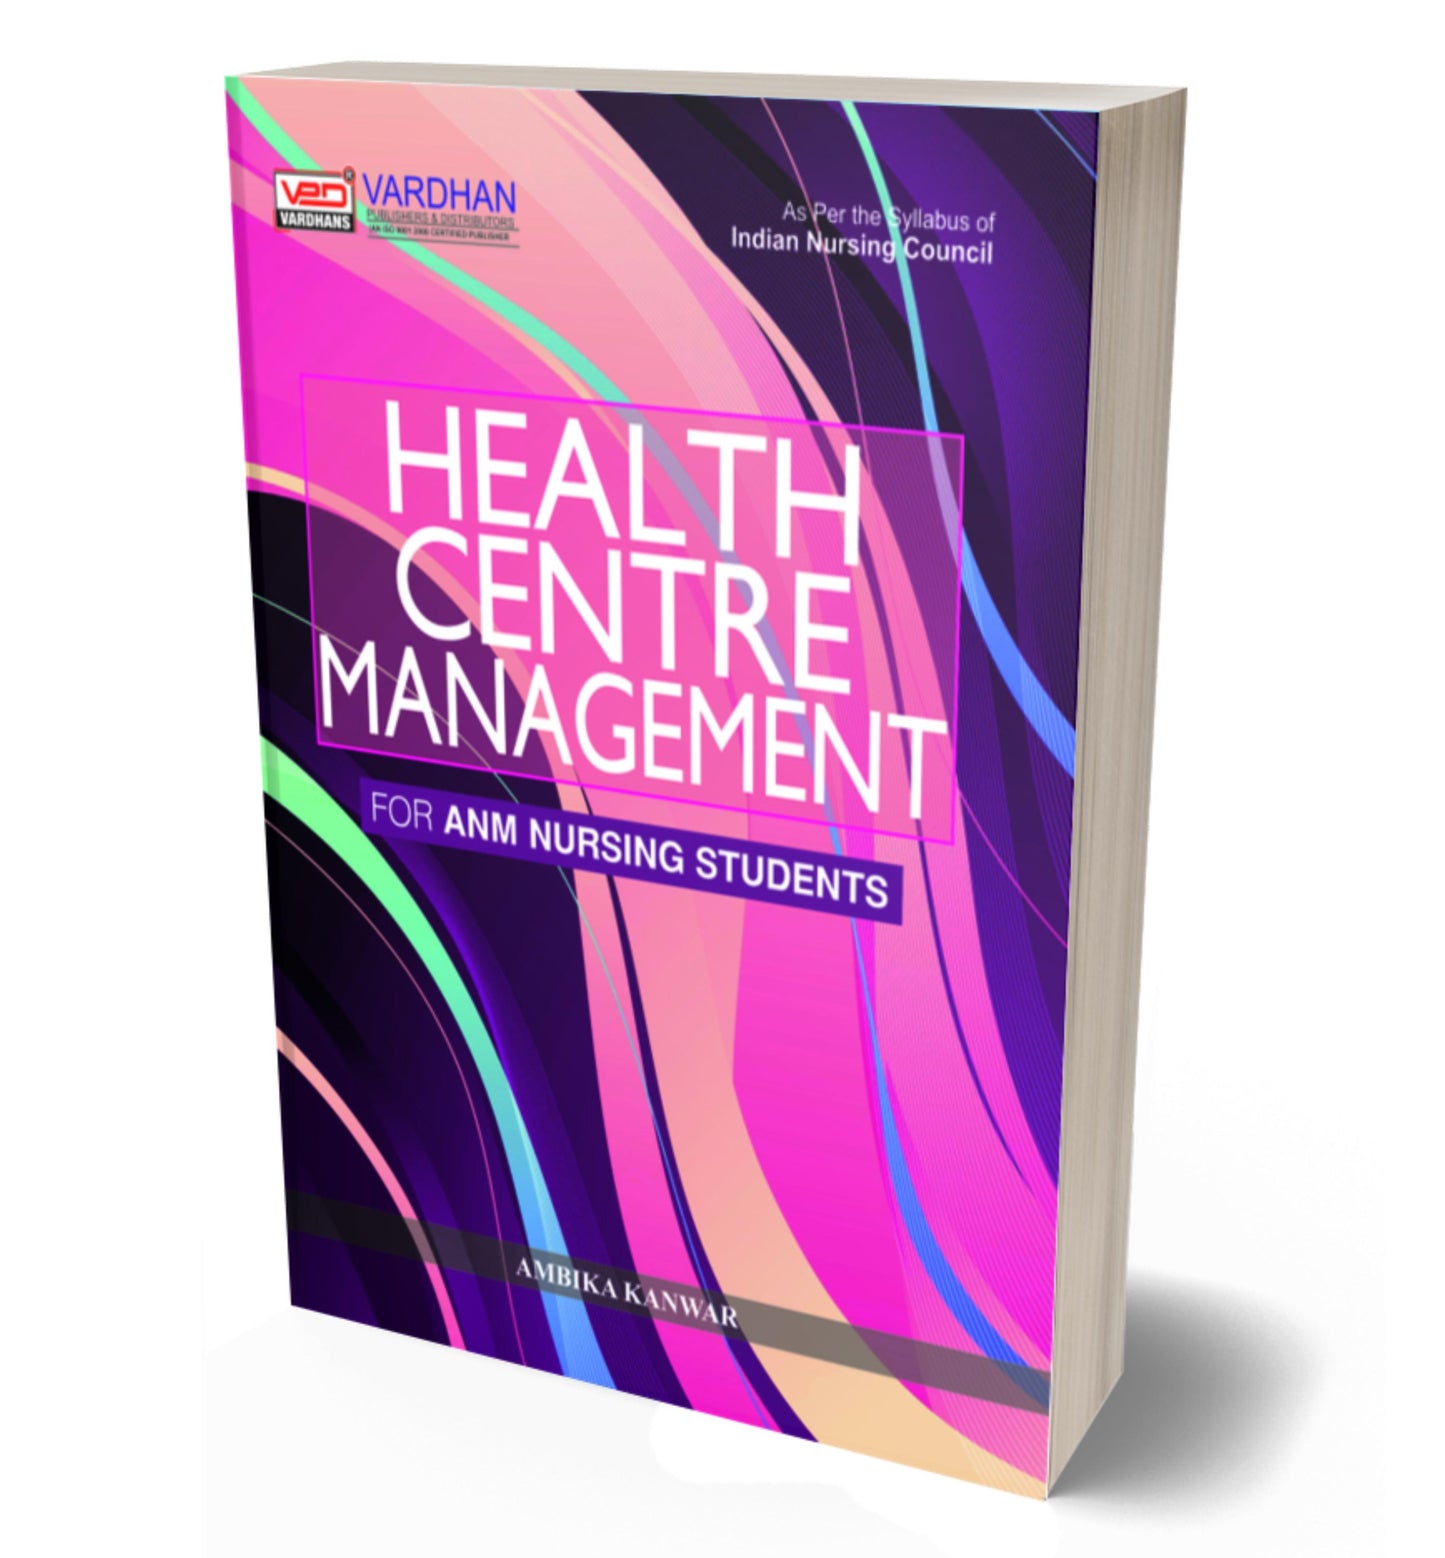 Health Centre Management for ANM Nursing Students